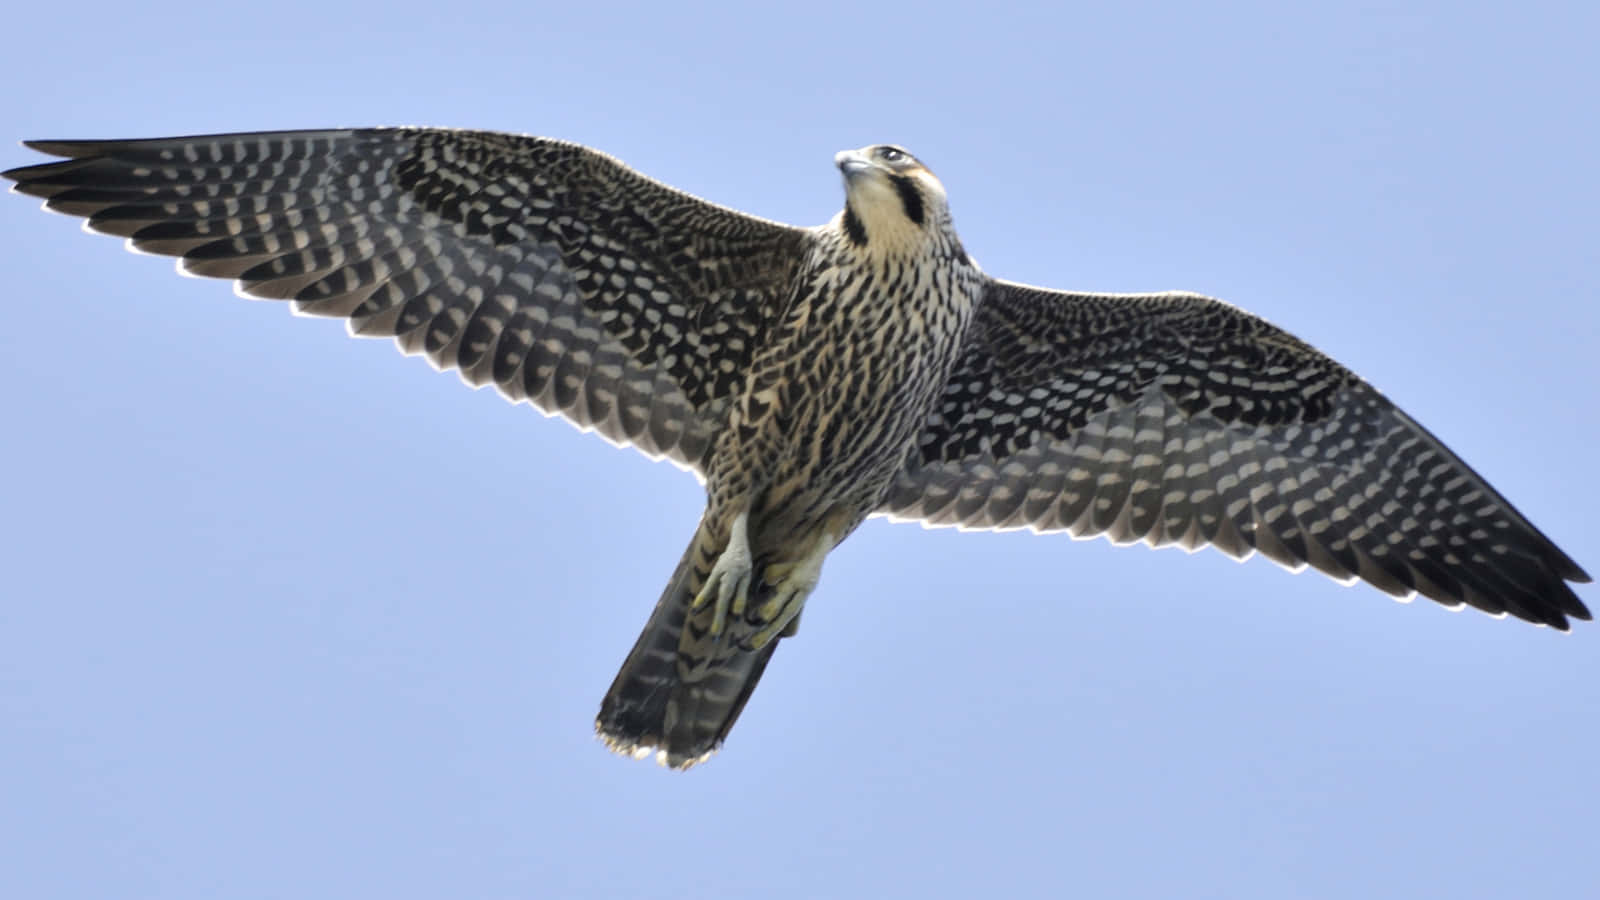 Enjoy the beautiful Falcon soaring in the sky